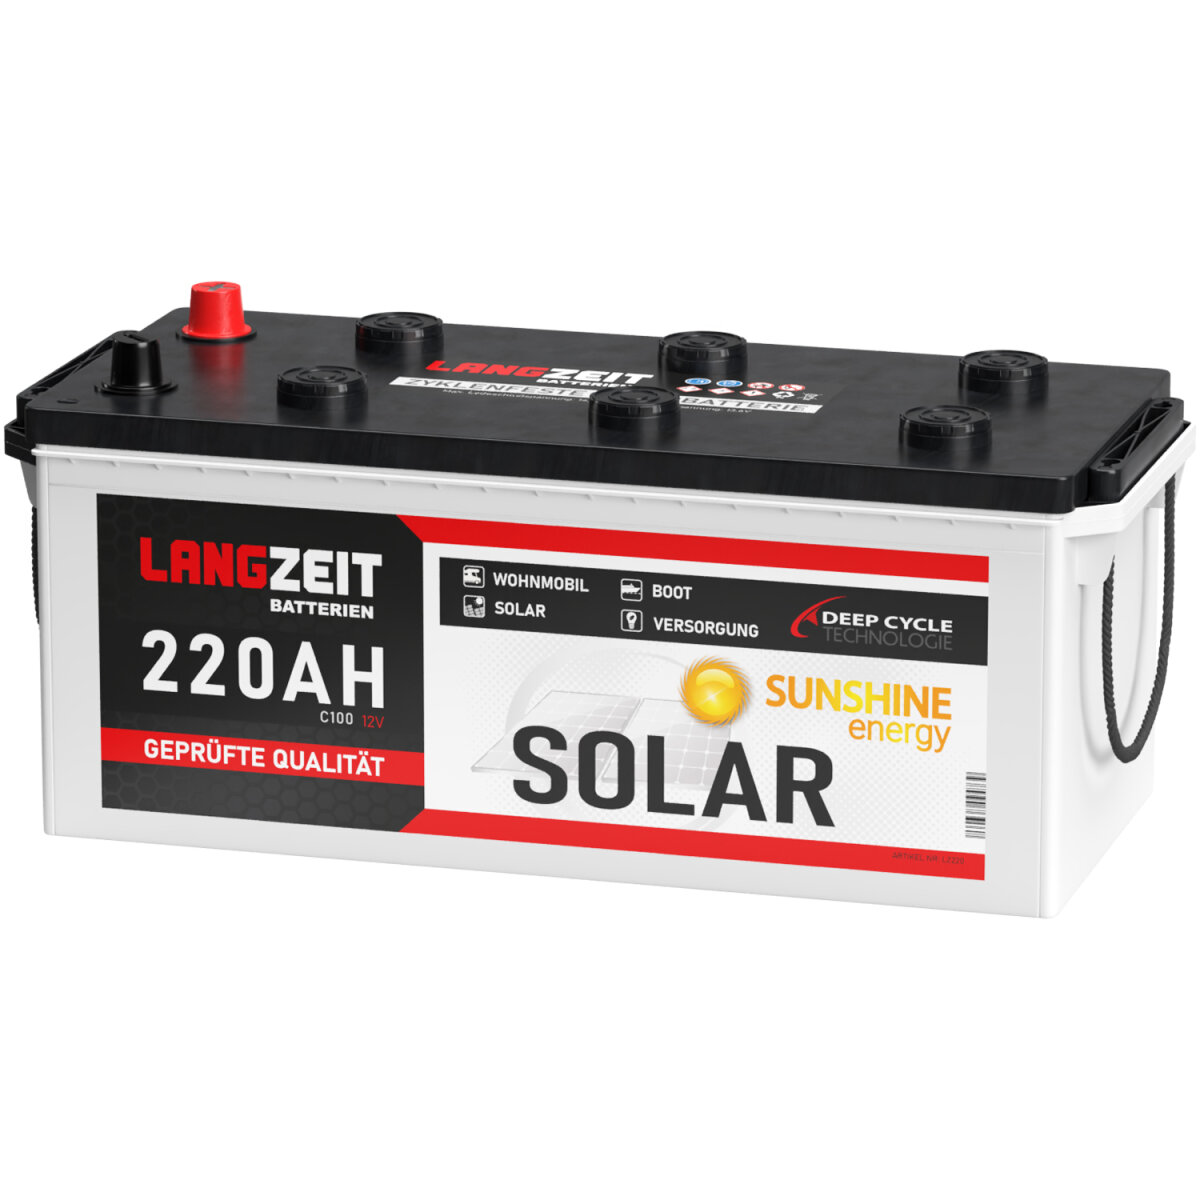 Langzeit Solarbatterie 220Ah 12V, 229,33 €